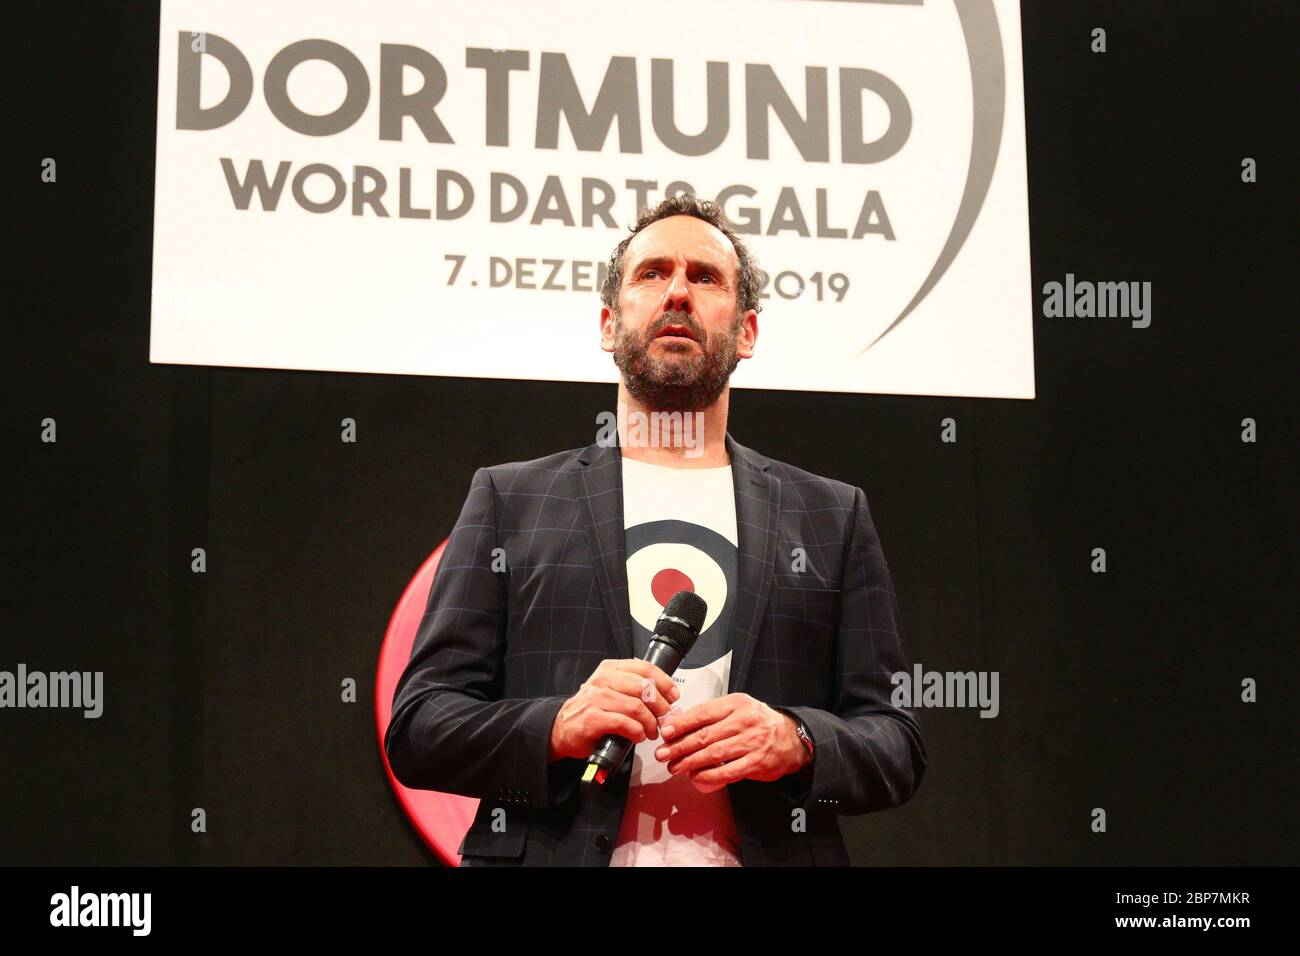 Elmar Paulke - Dartpapst, World Darts Gala, Westfalen Halle, Dortmund, 07.12.2019 Stockfoto